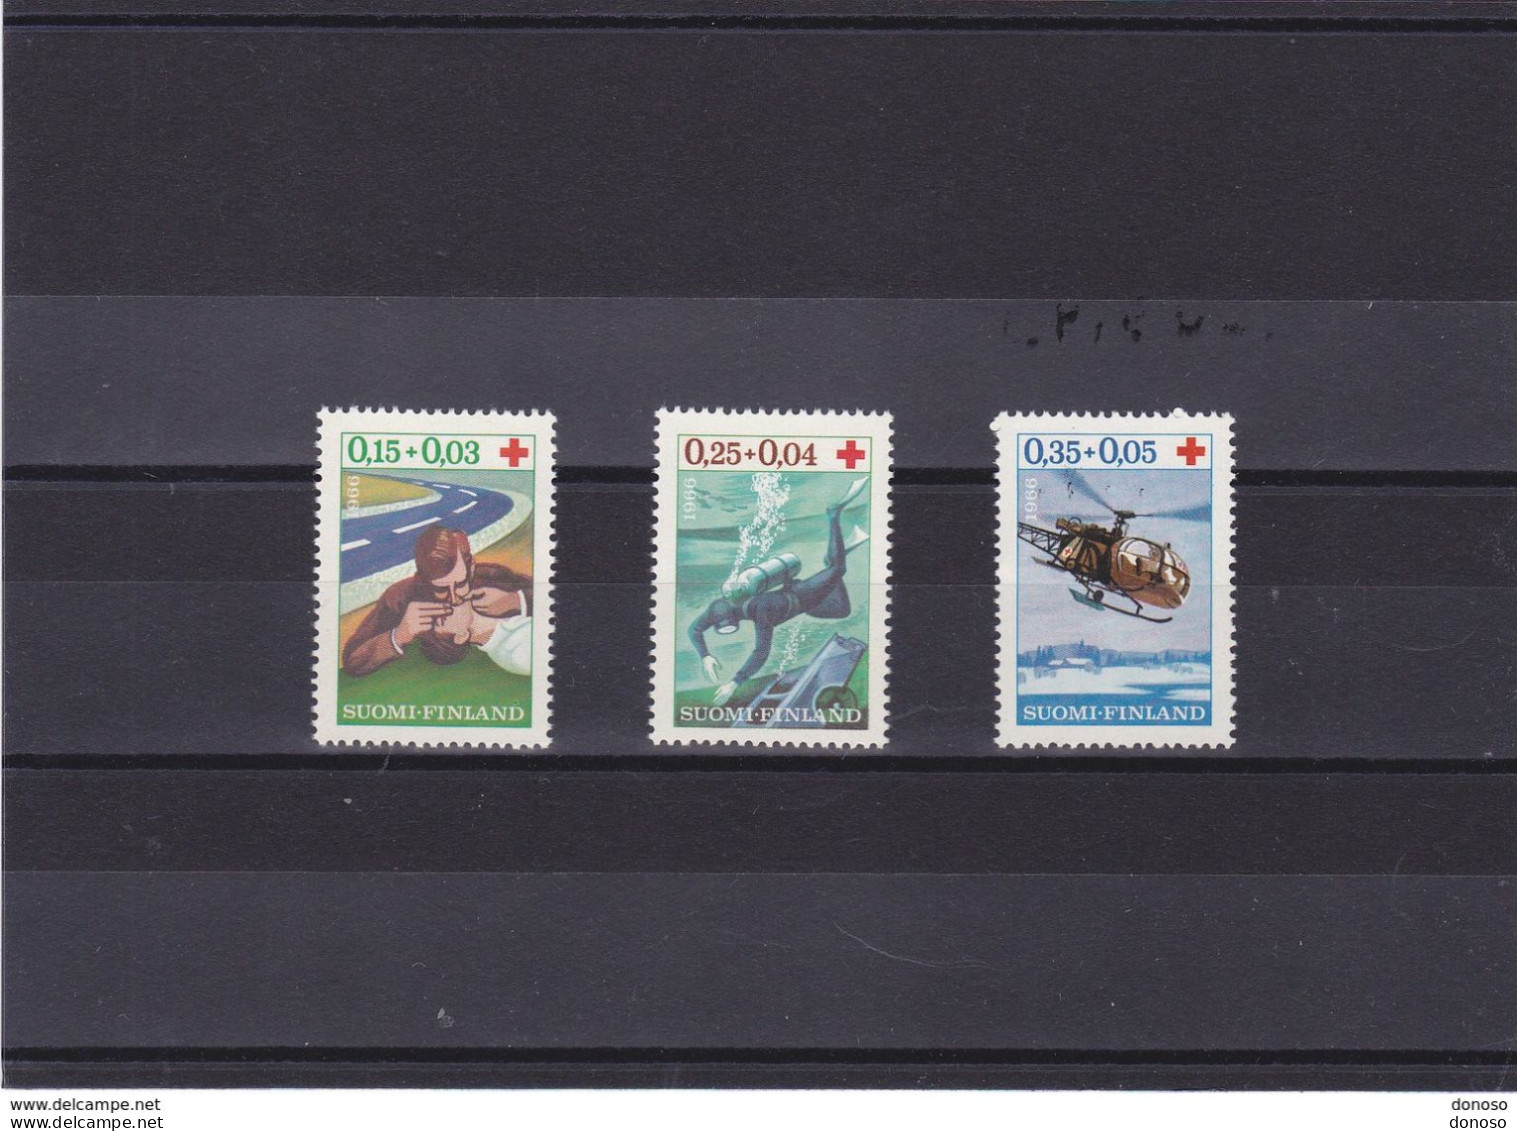 FINLANDE 1966 CROIX ROUGE Yvert 580-582, Michel 609-611 NEUF** MNH Cote 5,25 Euros - Unused Stamps